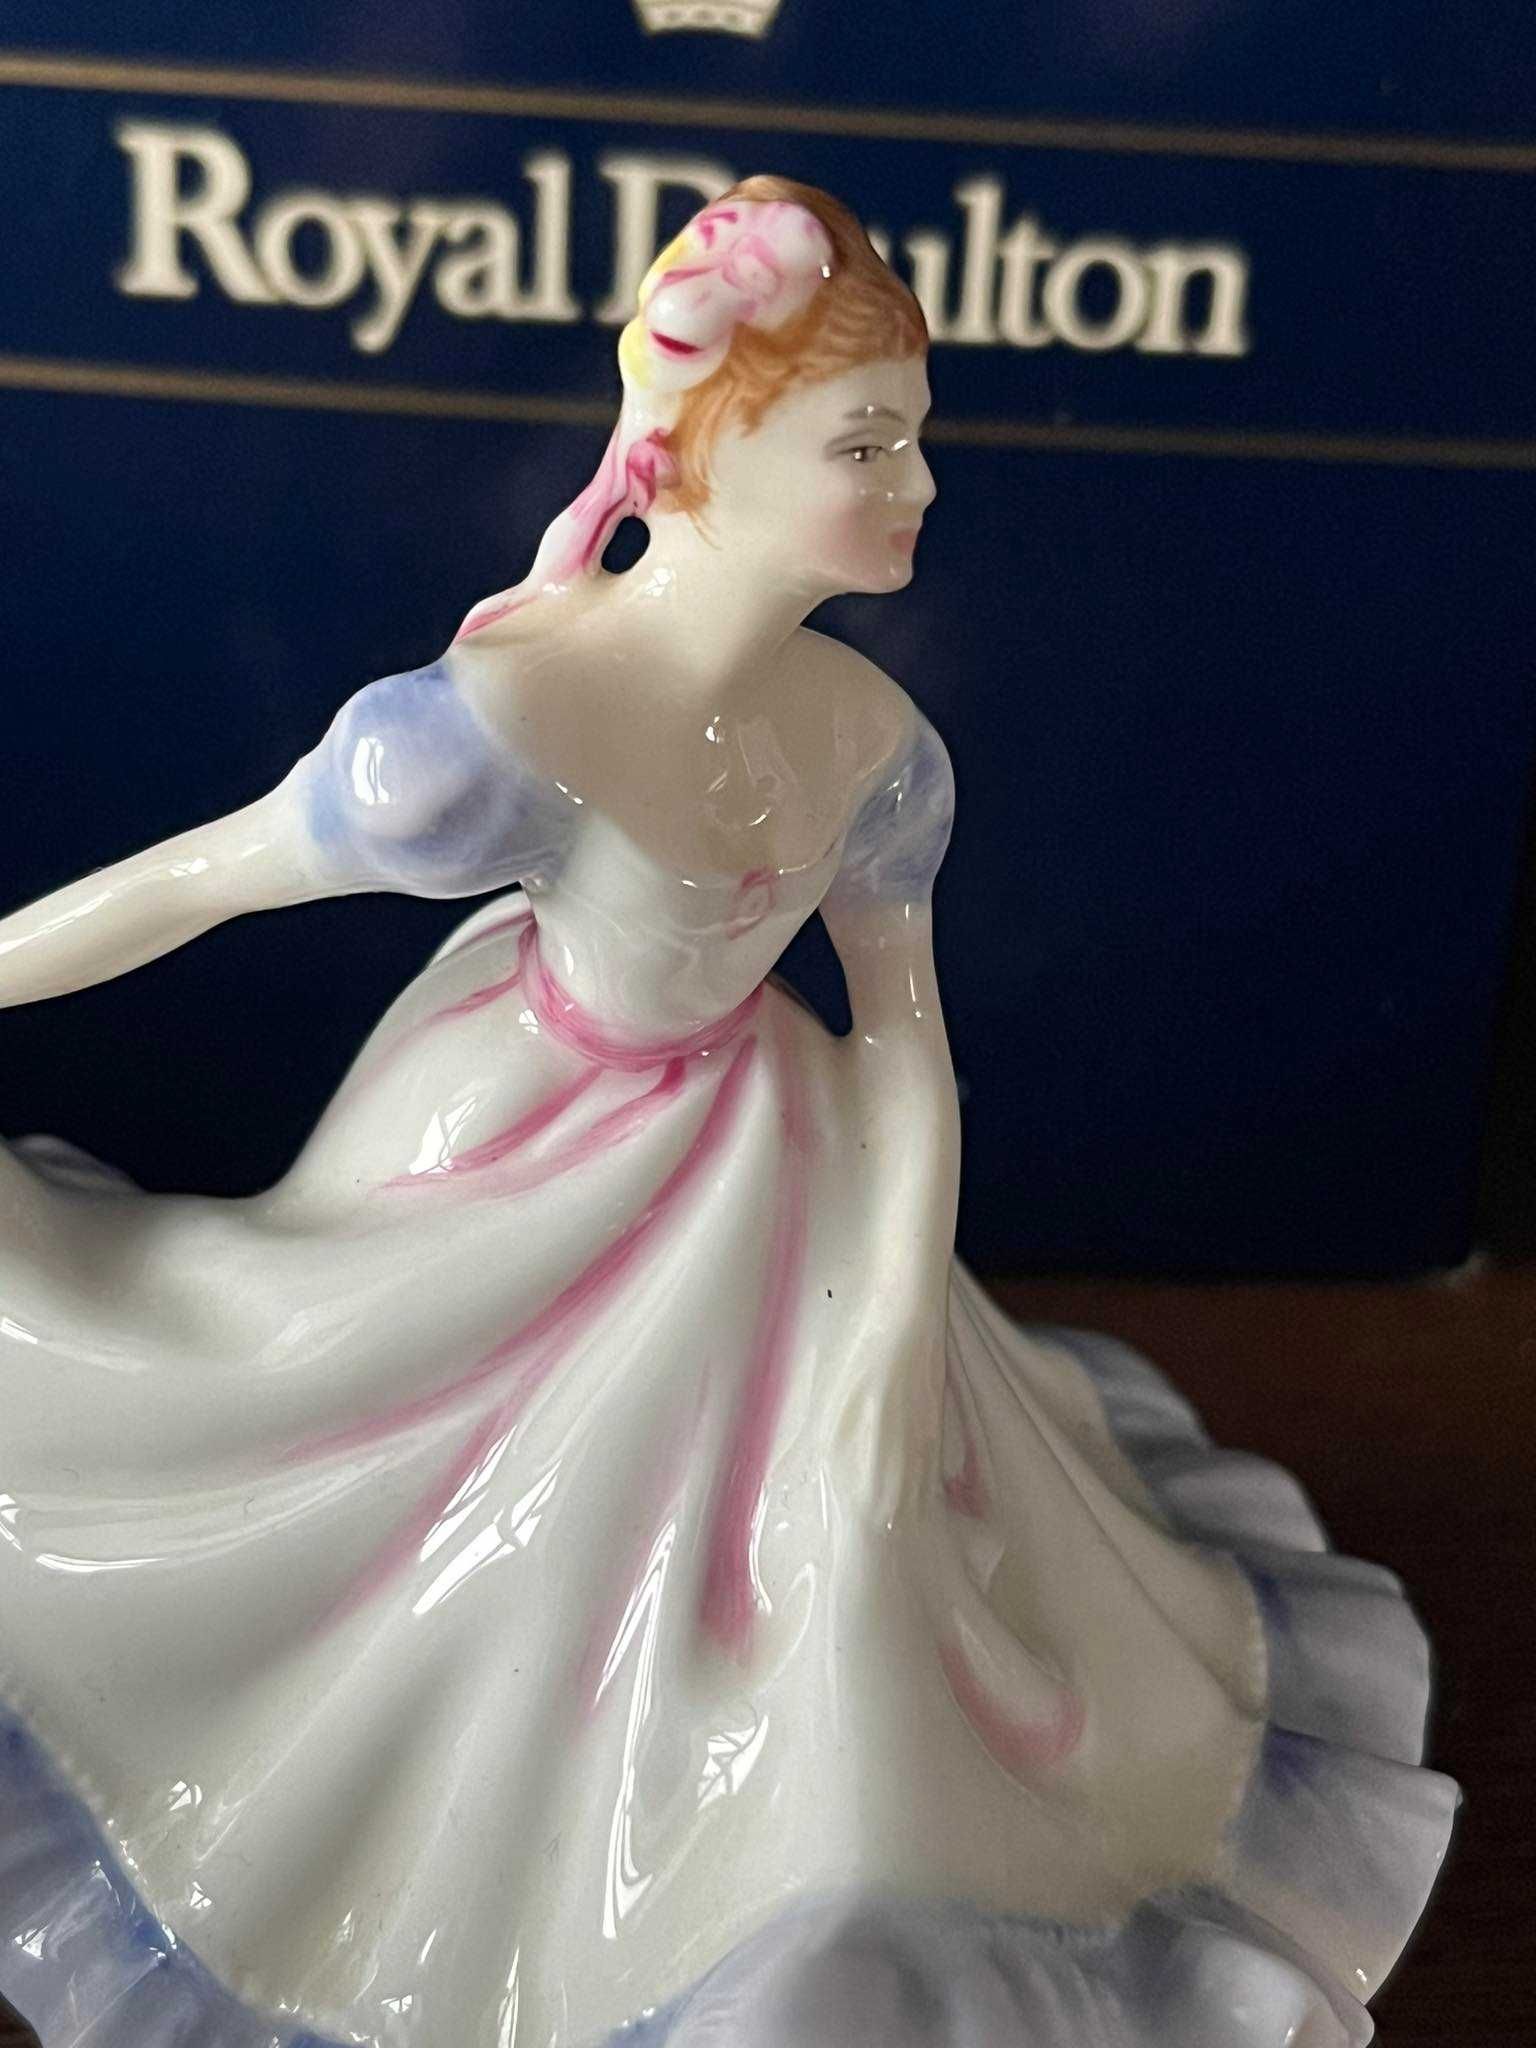 Dama porcelanowa figurka Royal Doulton Ninette HN 3215